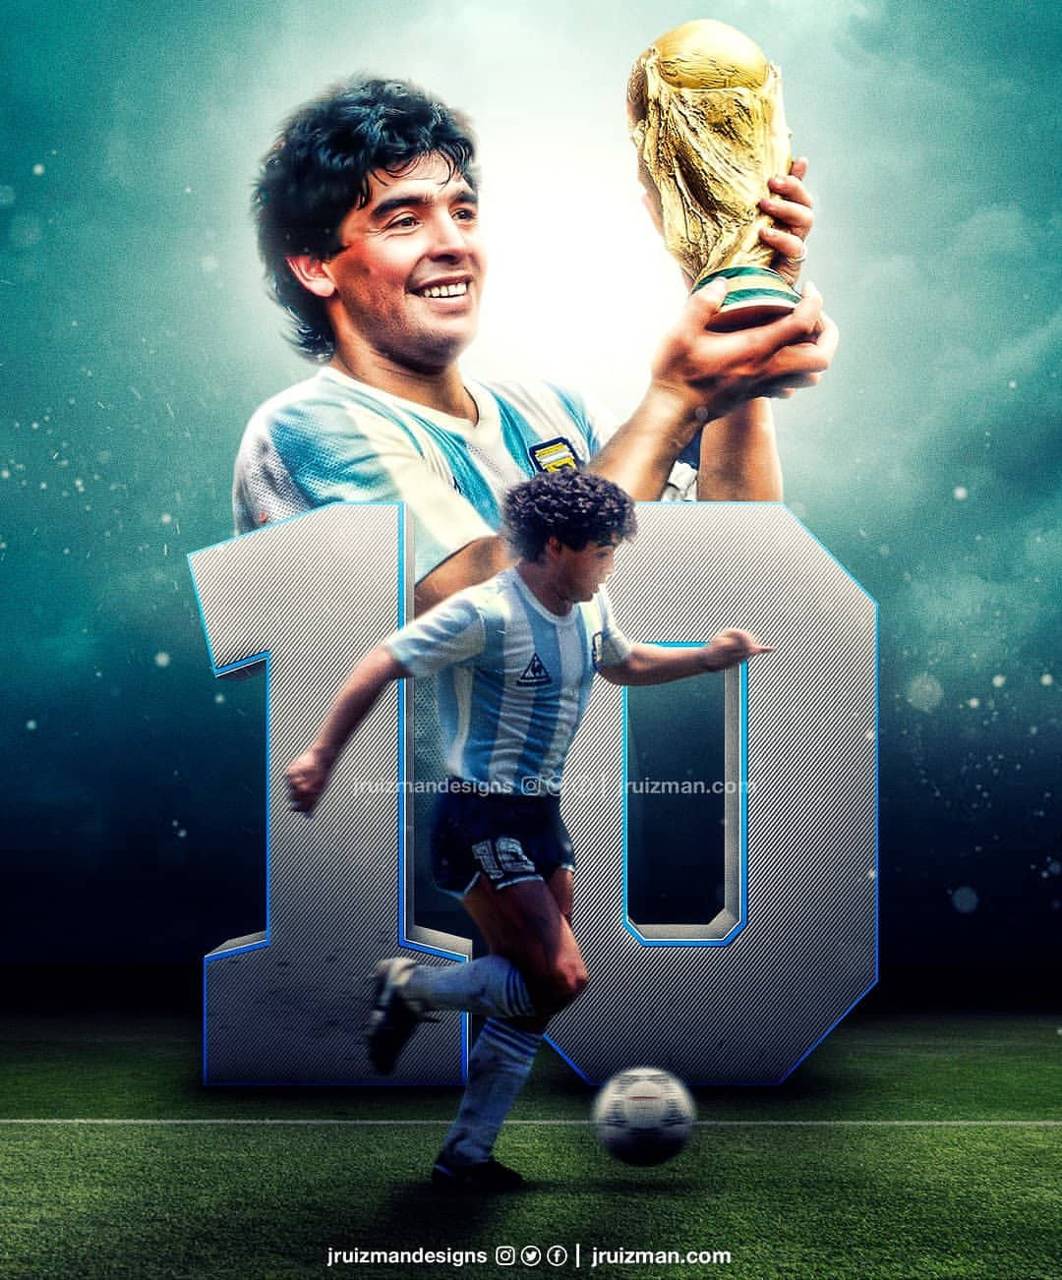 Messi and Maradona Wallpapers  Top 25 Best Messi and Maradona Wallpapers  Download